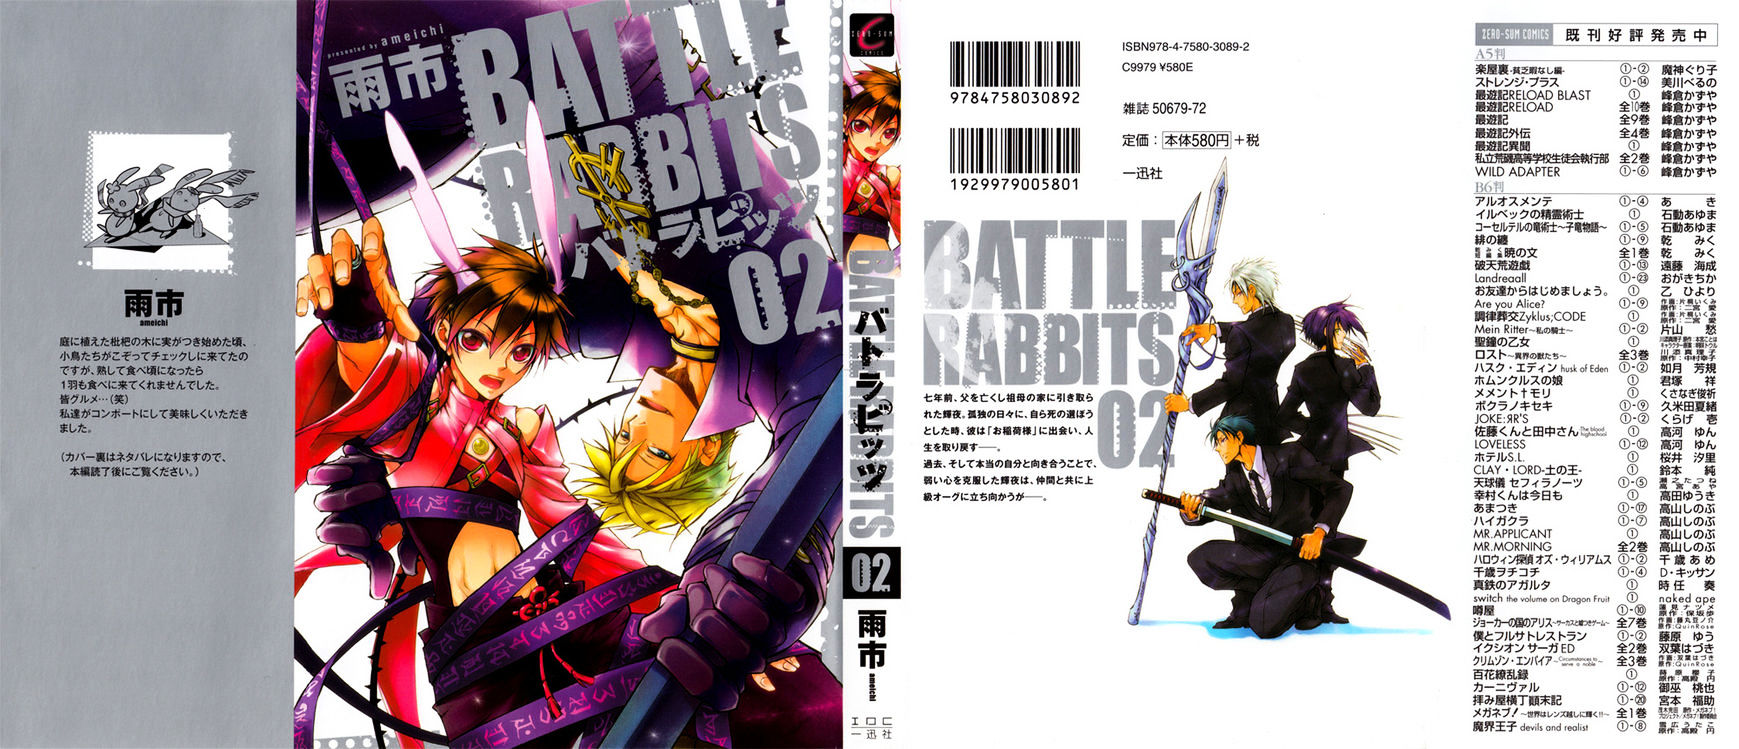 Battle Rabbits Chapter 5 #3